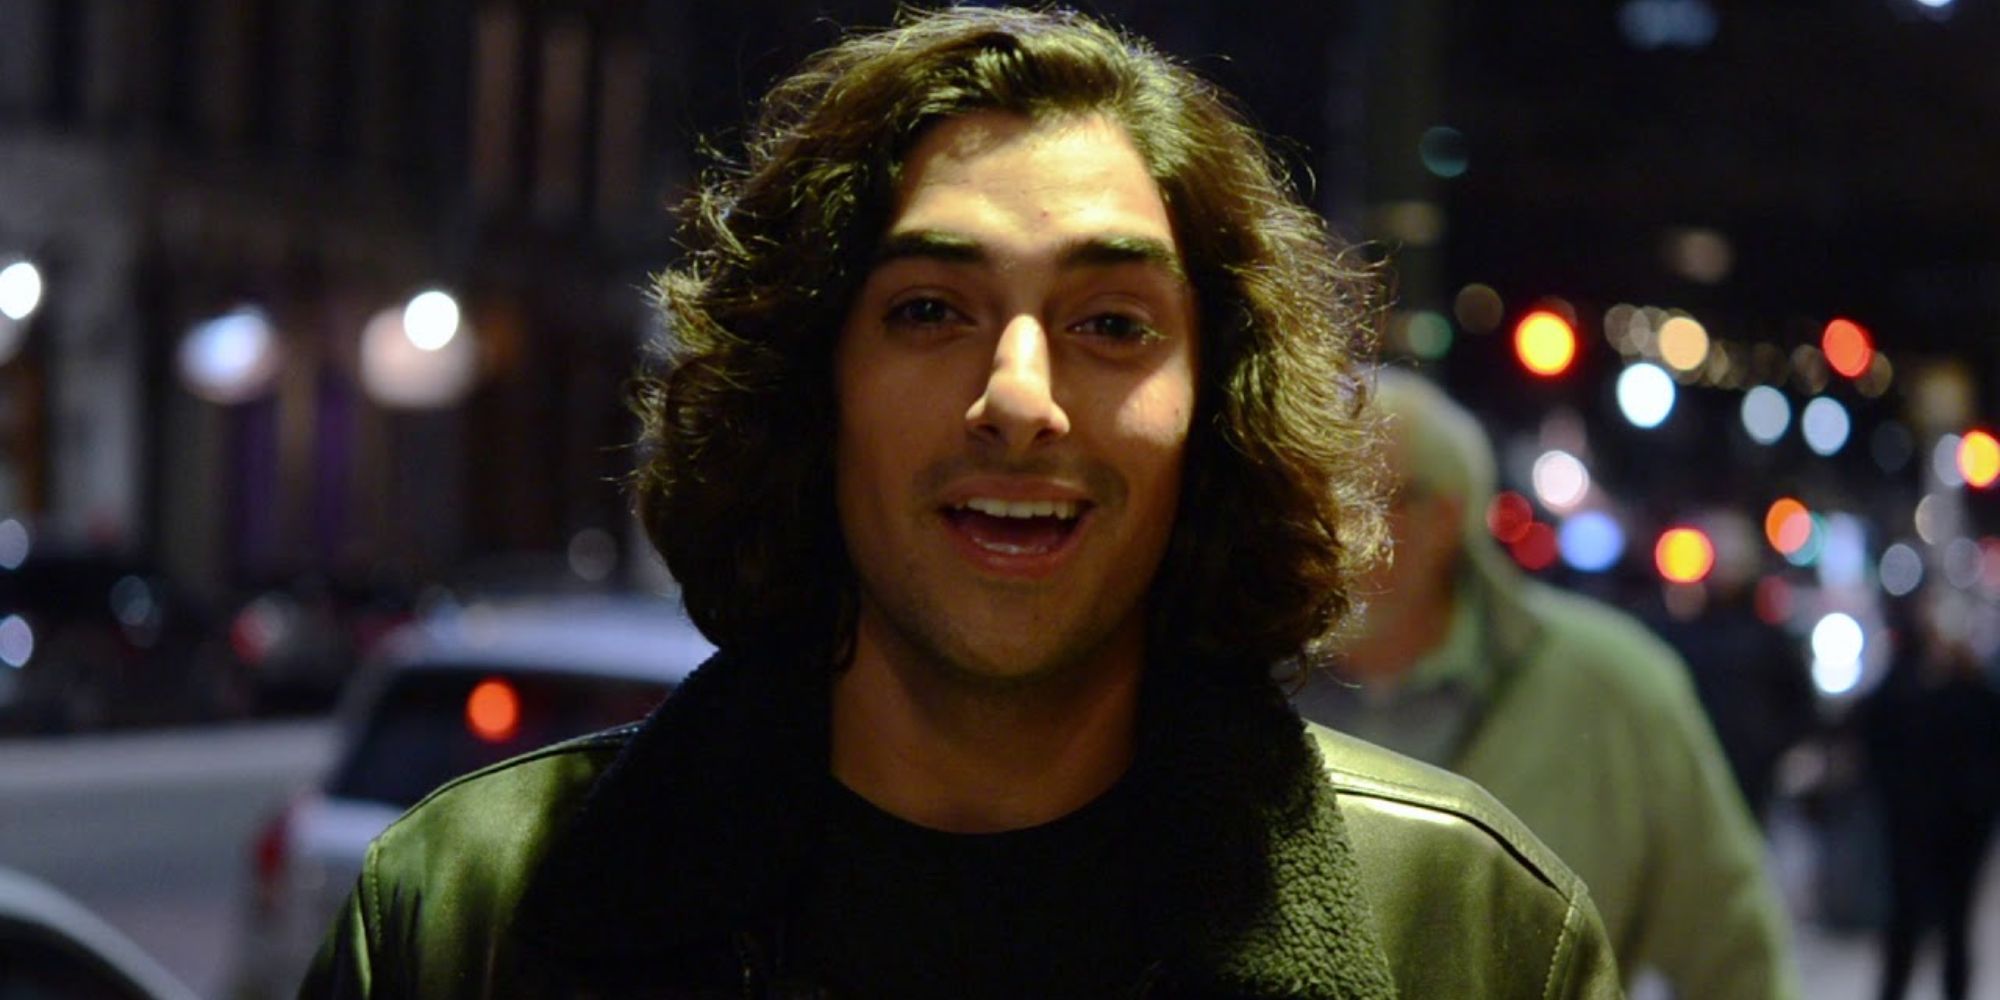 Still of actor Eman Esfandi standing on a busy street at night